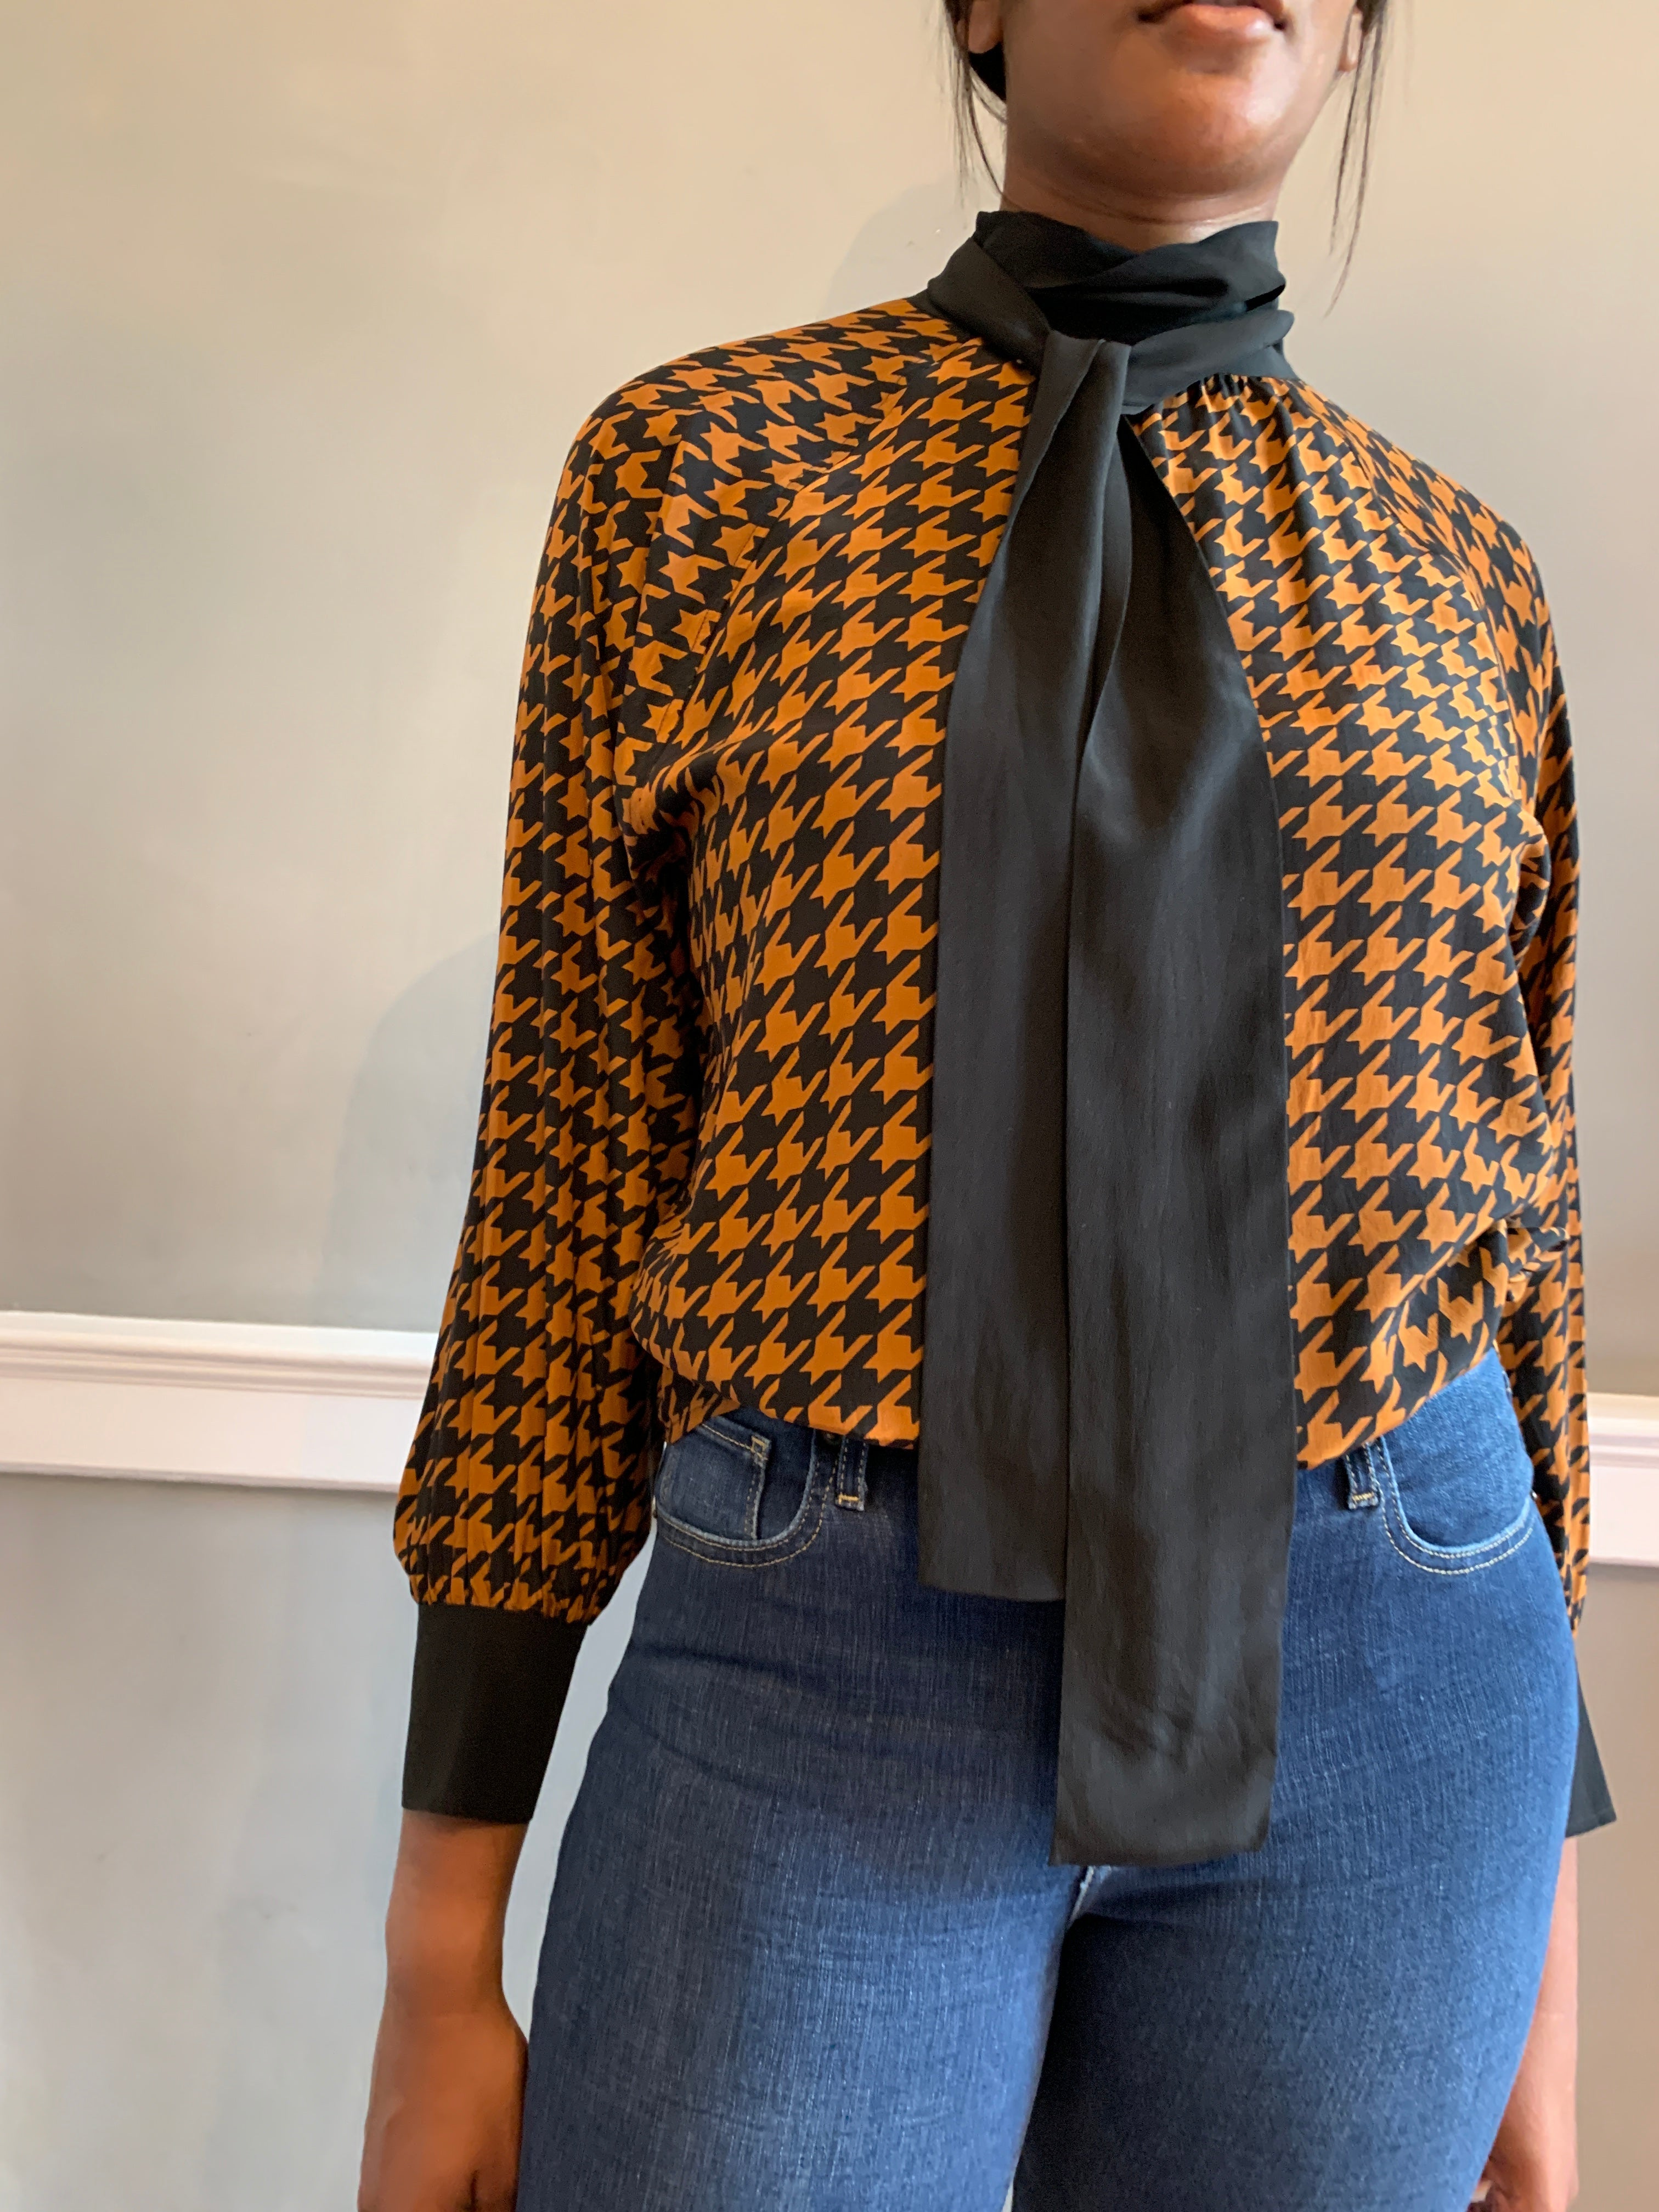 Vintage Yves Saint Laurent silk blouse